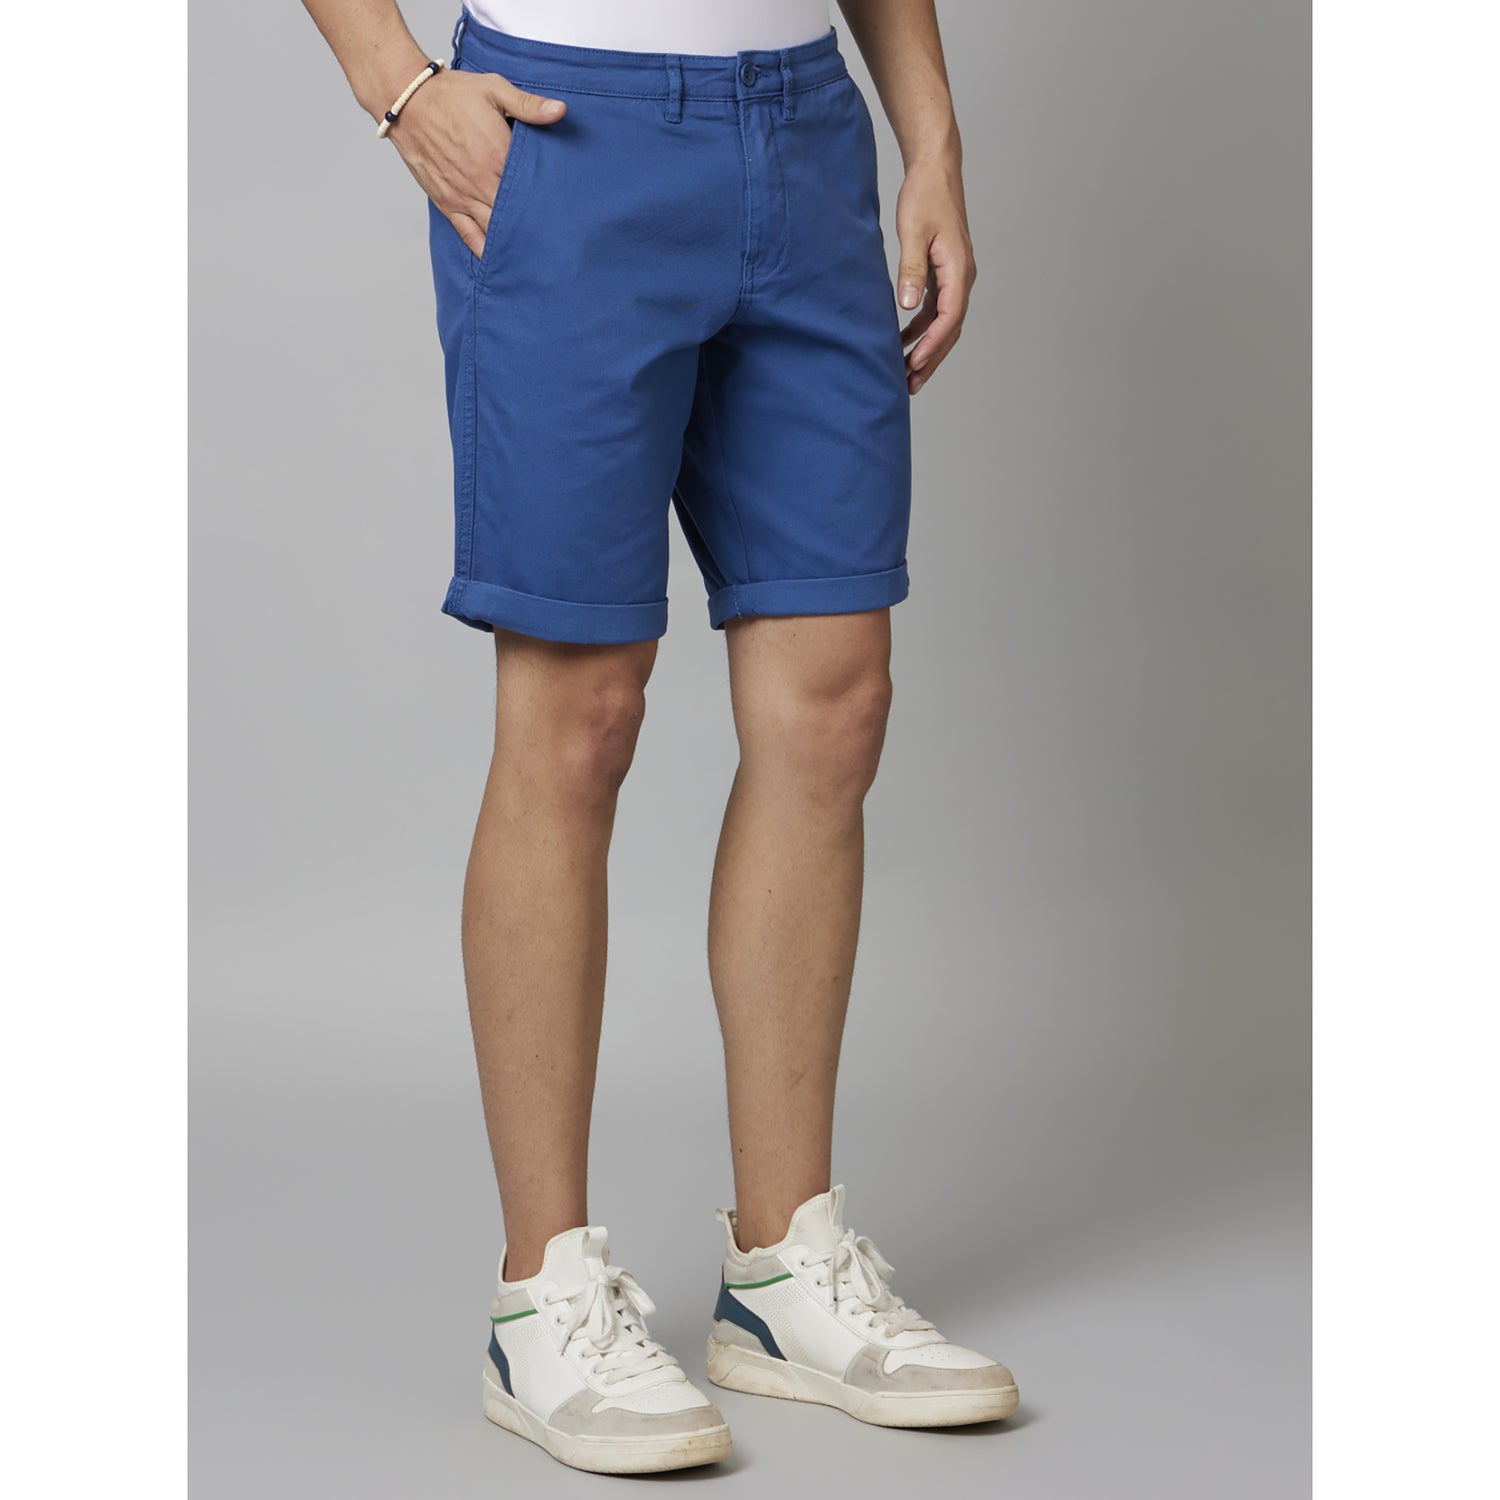 Blue Solid Cotton Shorts (BOCHINOBM)